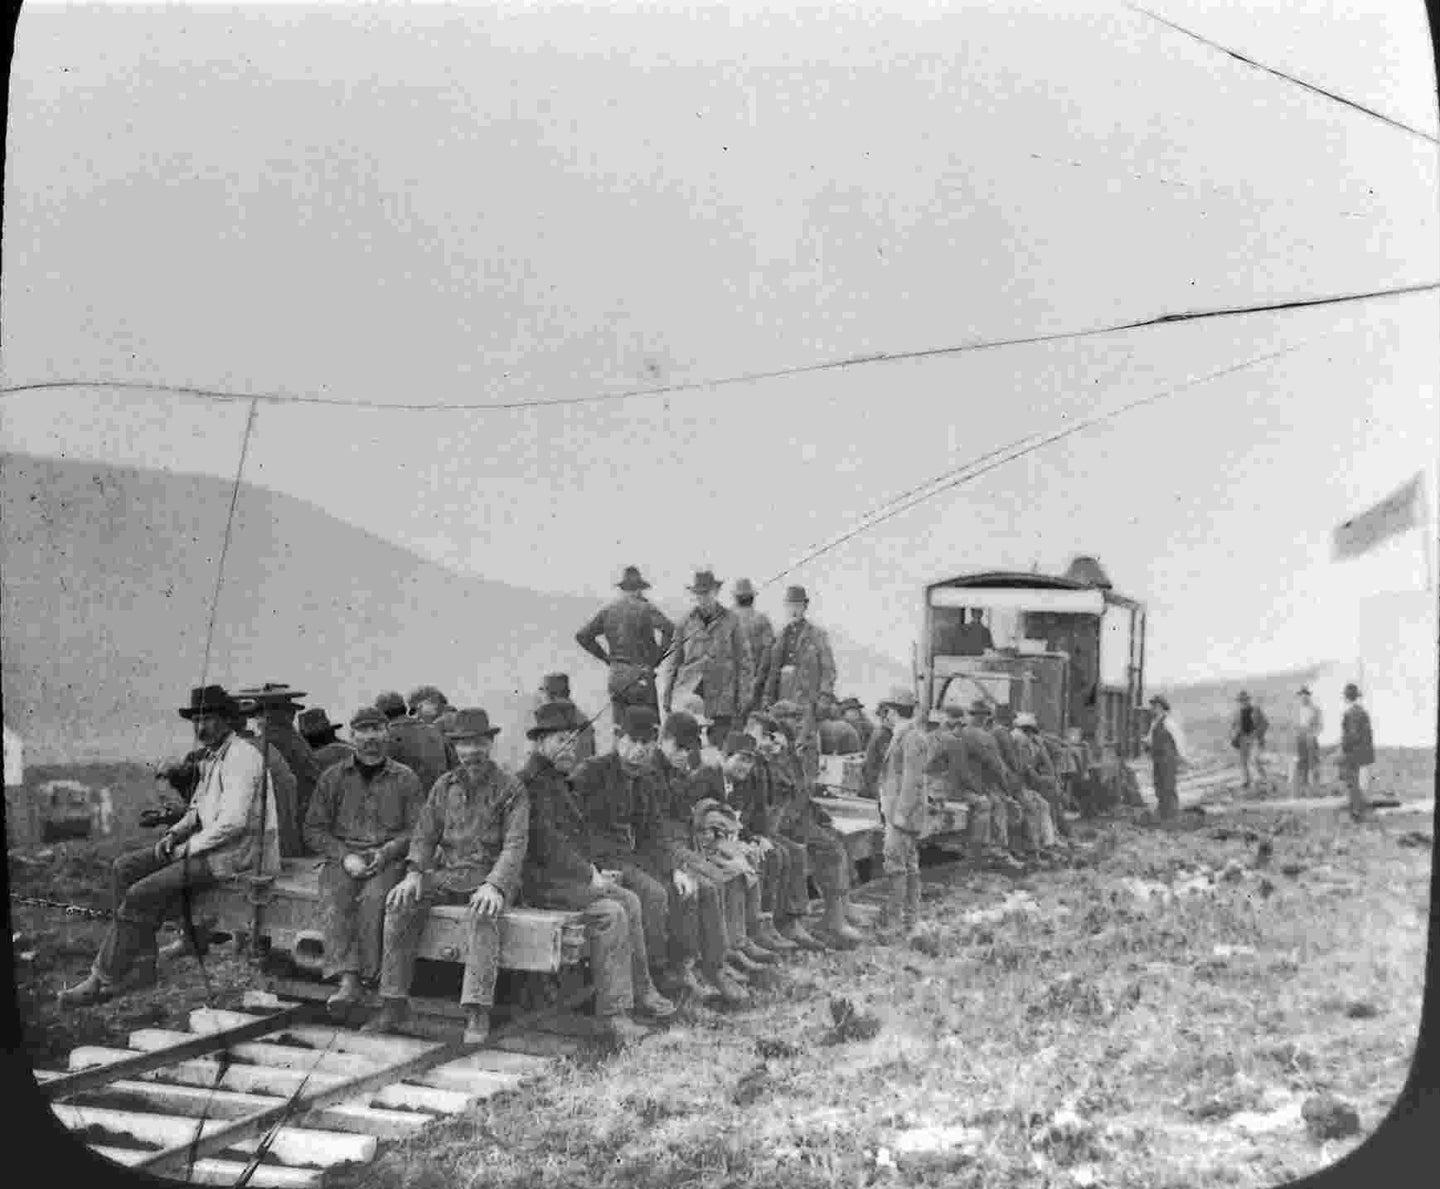 Miners on a Railway Car, c1898